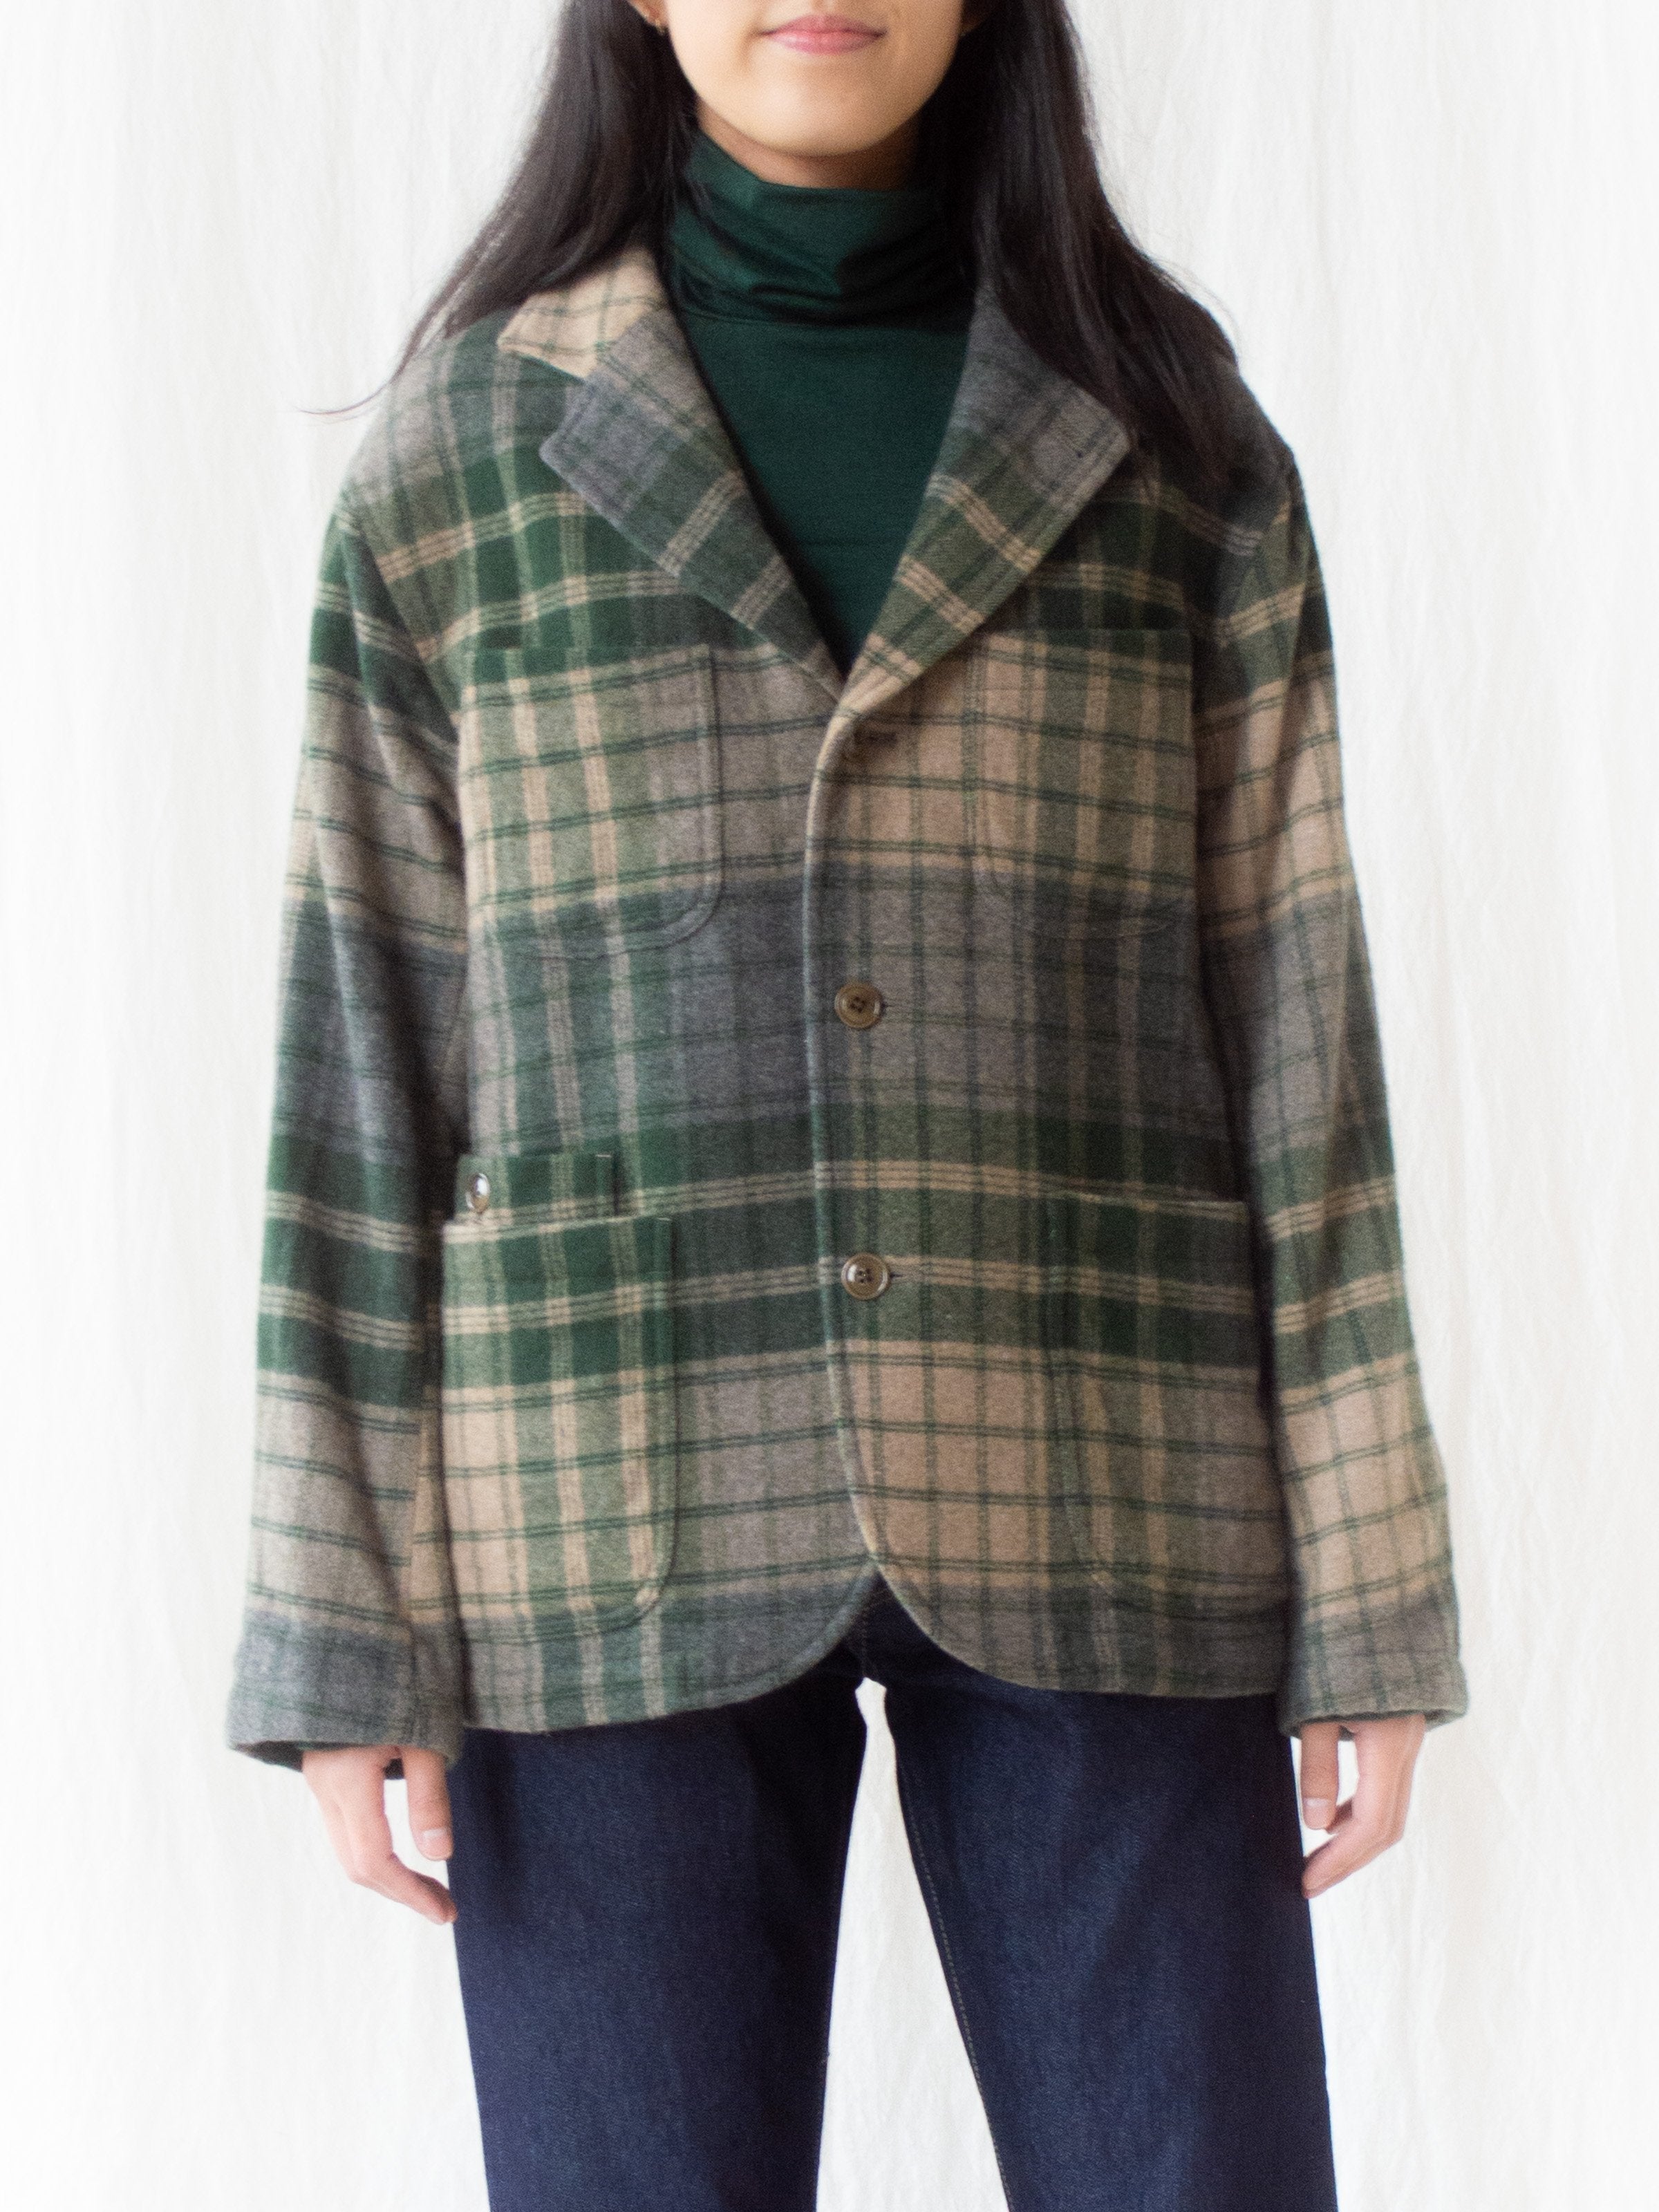 Namu Shop - ts(s) 4+1 Patch Pocket Jacket - Green/Gray Beige Wool Plaid